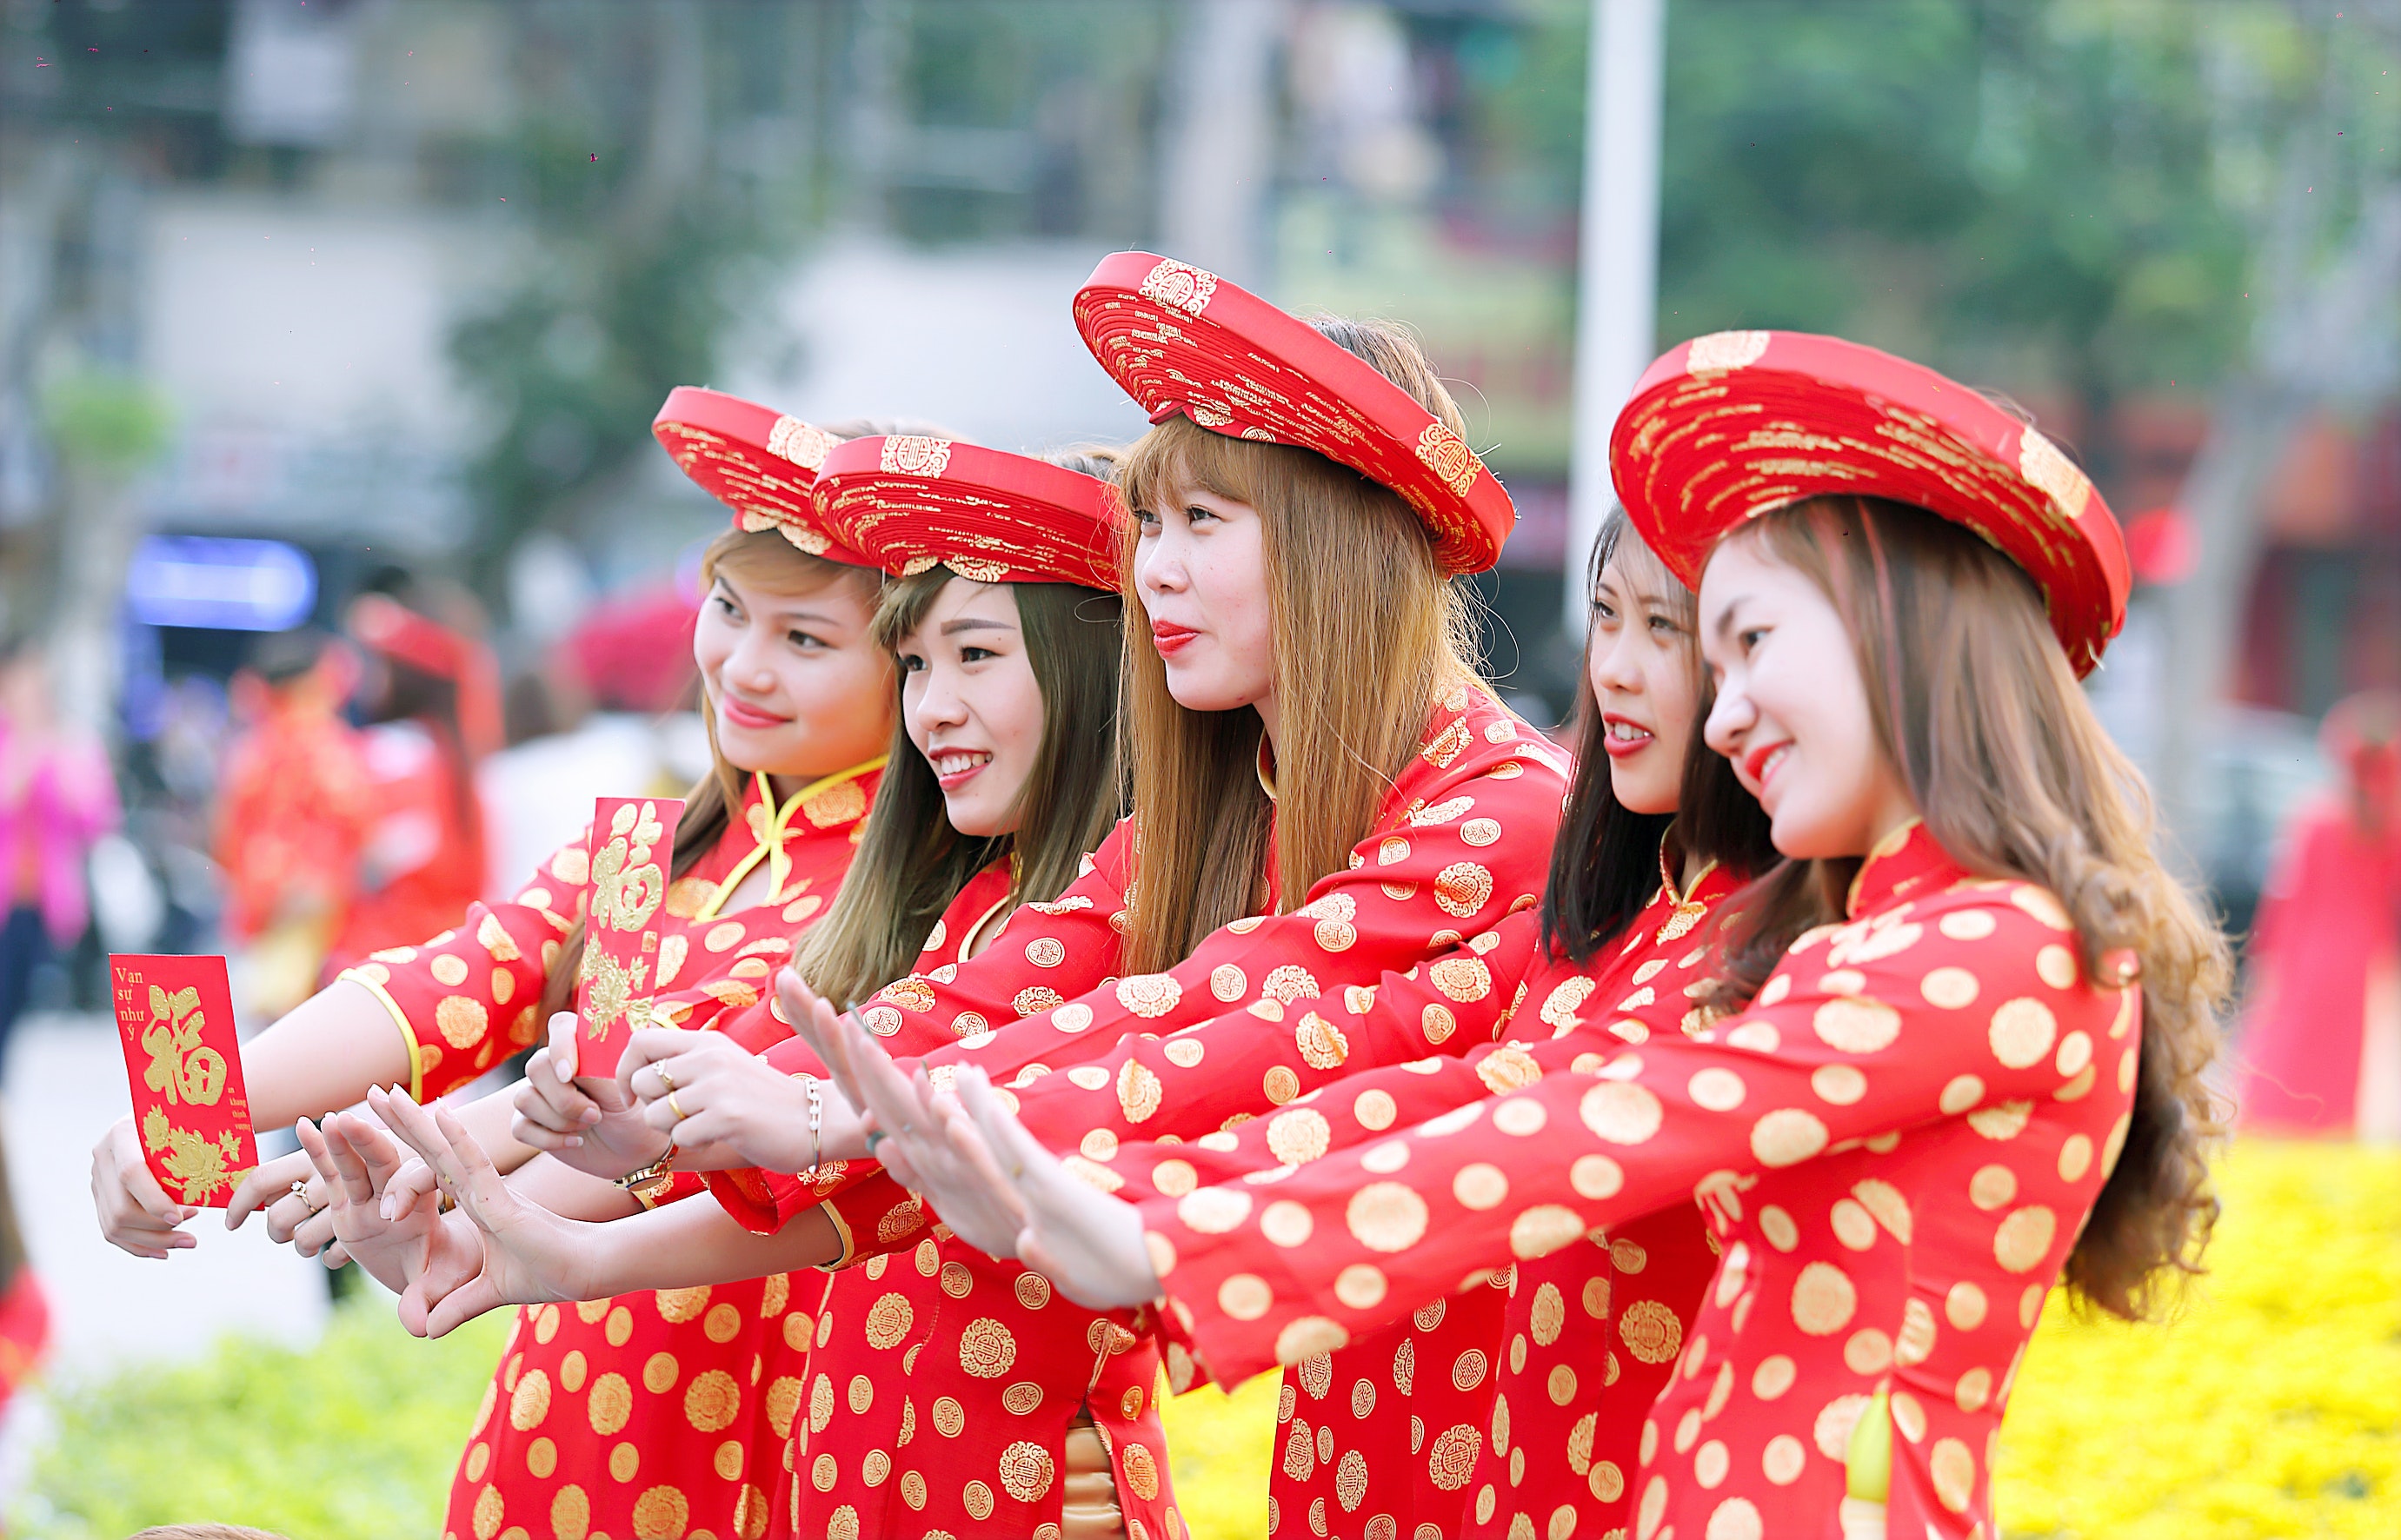 Five women in red and white polka dot cheongsam dress standing photo